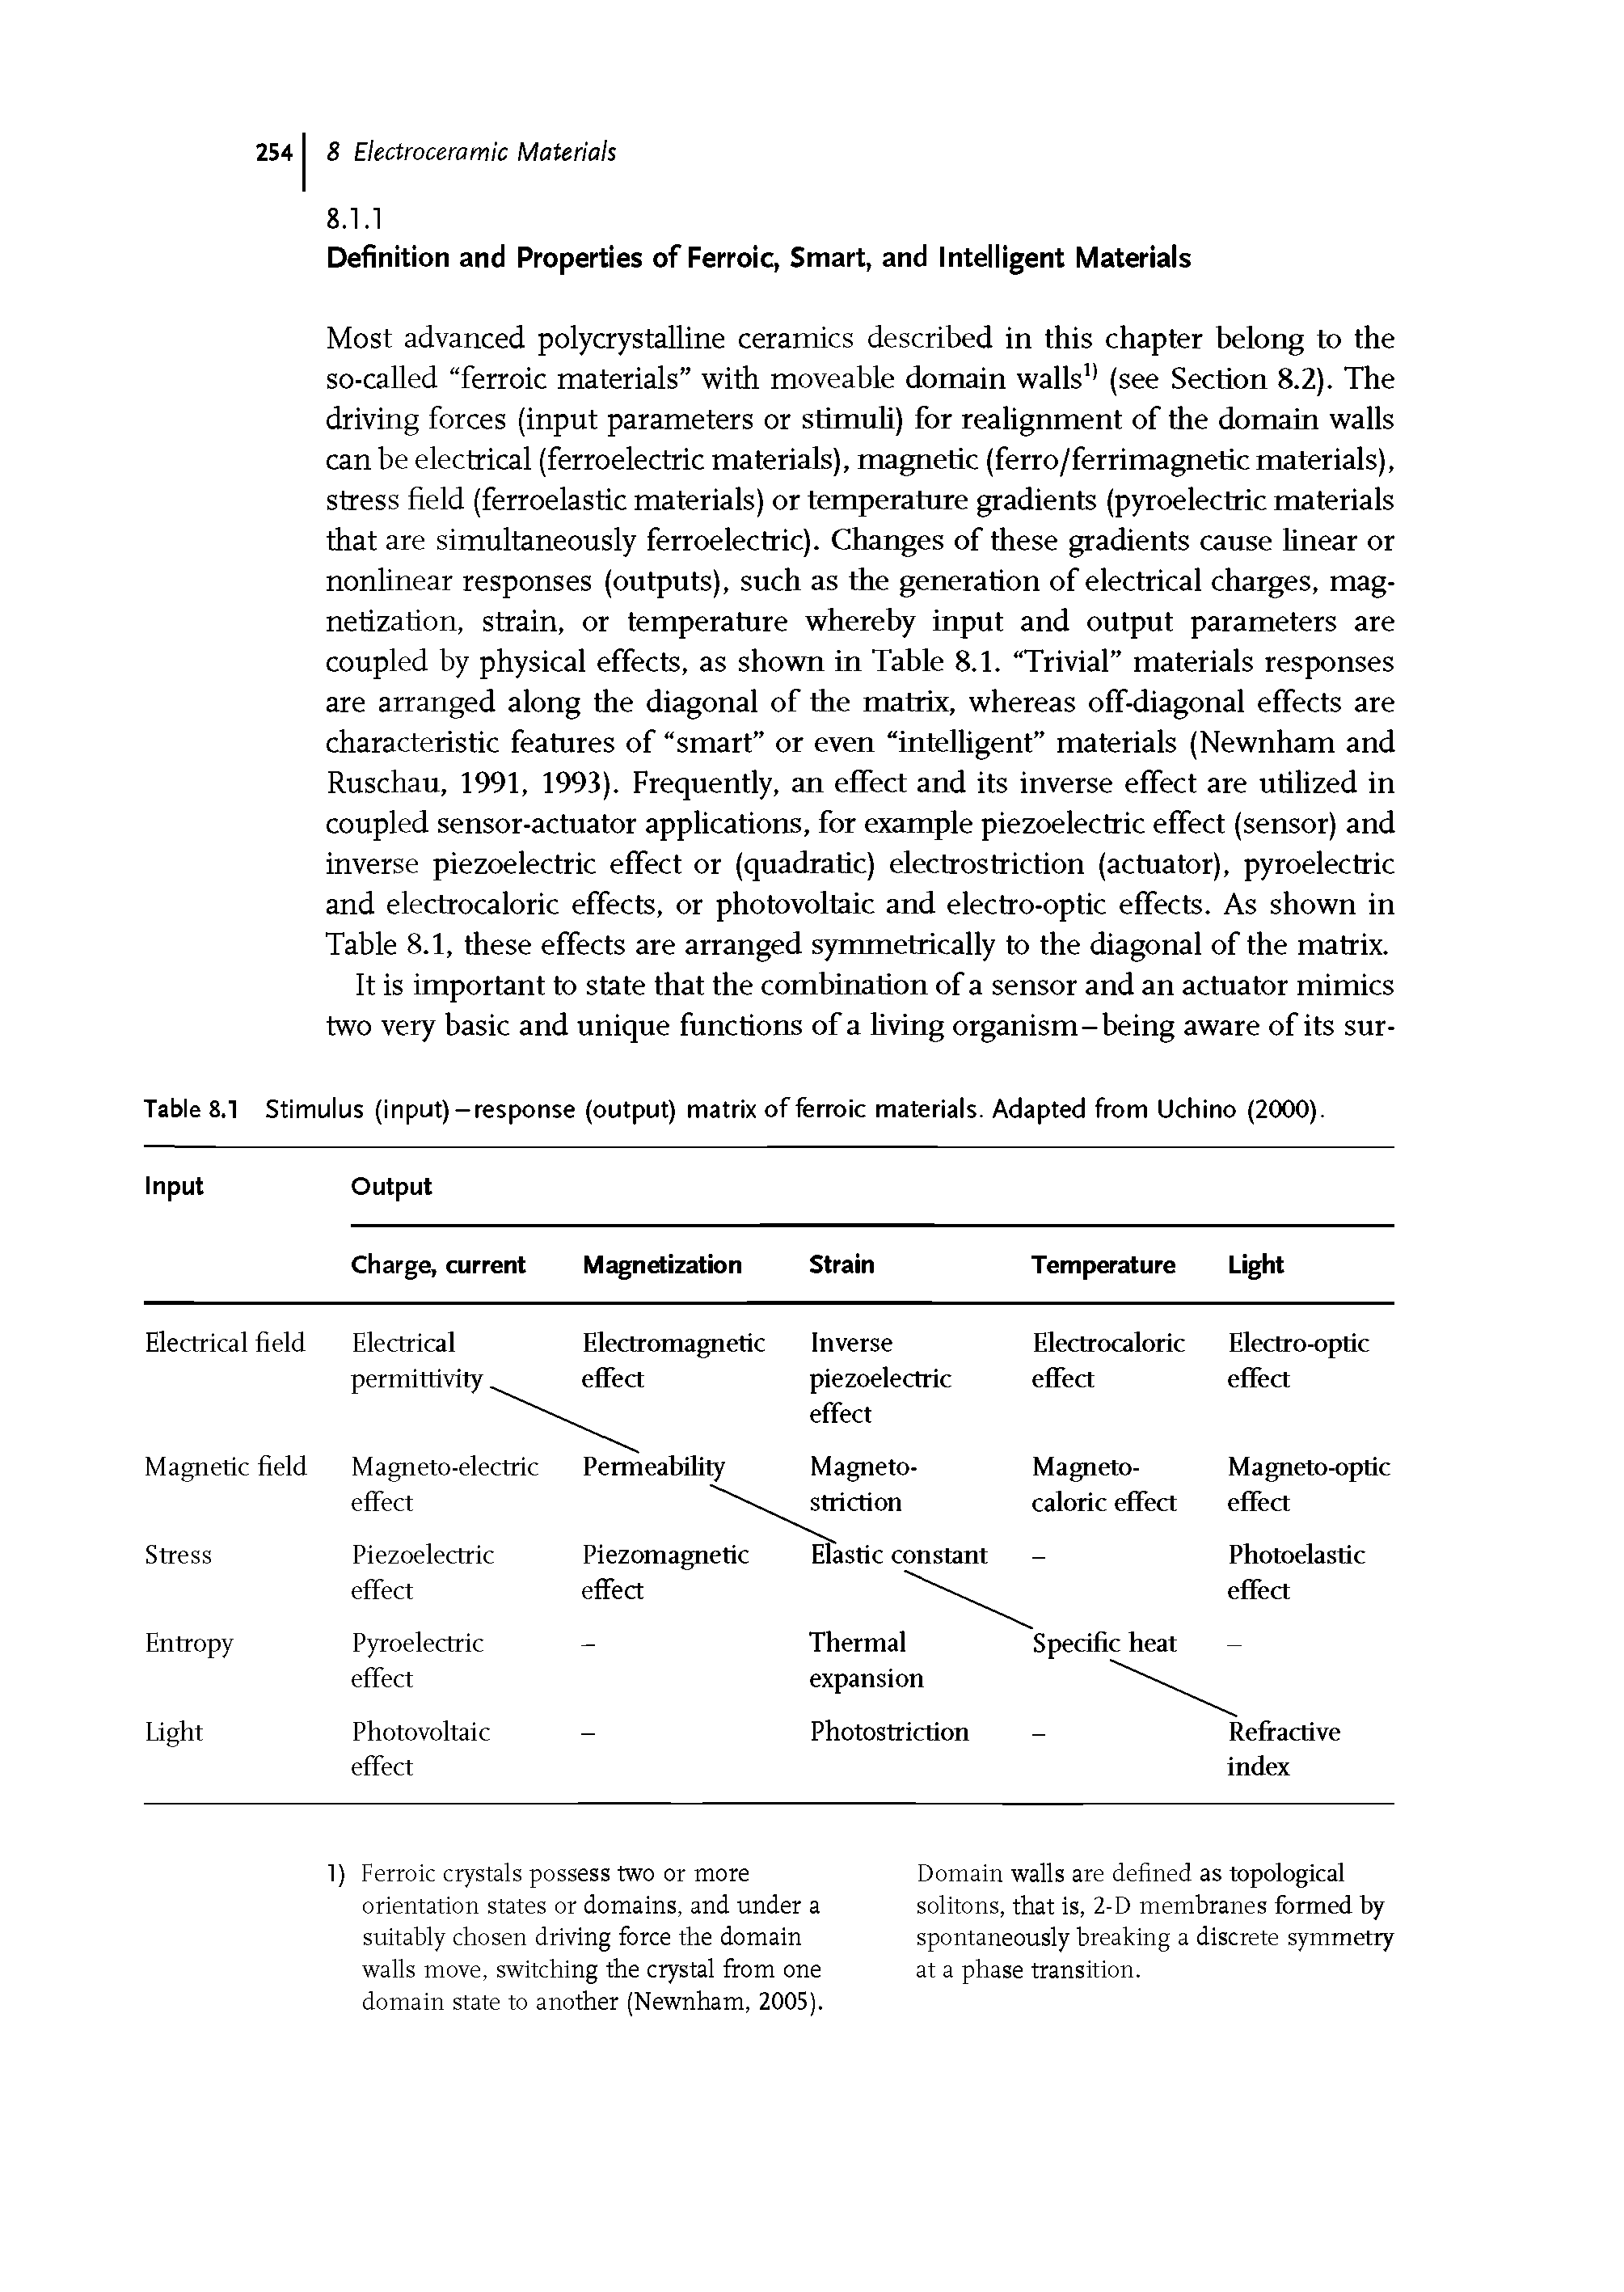 Table 8.1 Stimulus (input)-response (output) matrix of ferroic materials. Adapted from Uchino (2000).